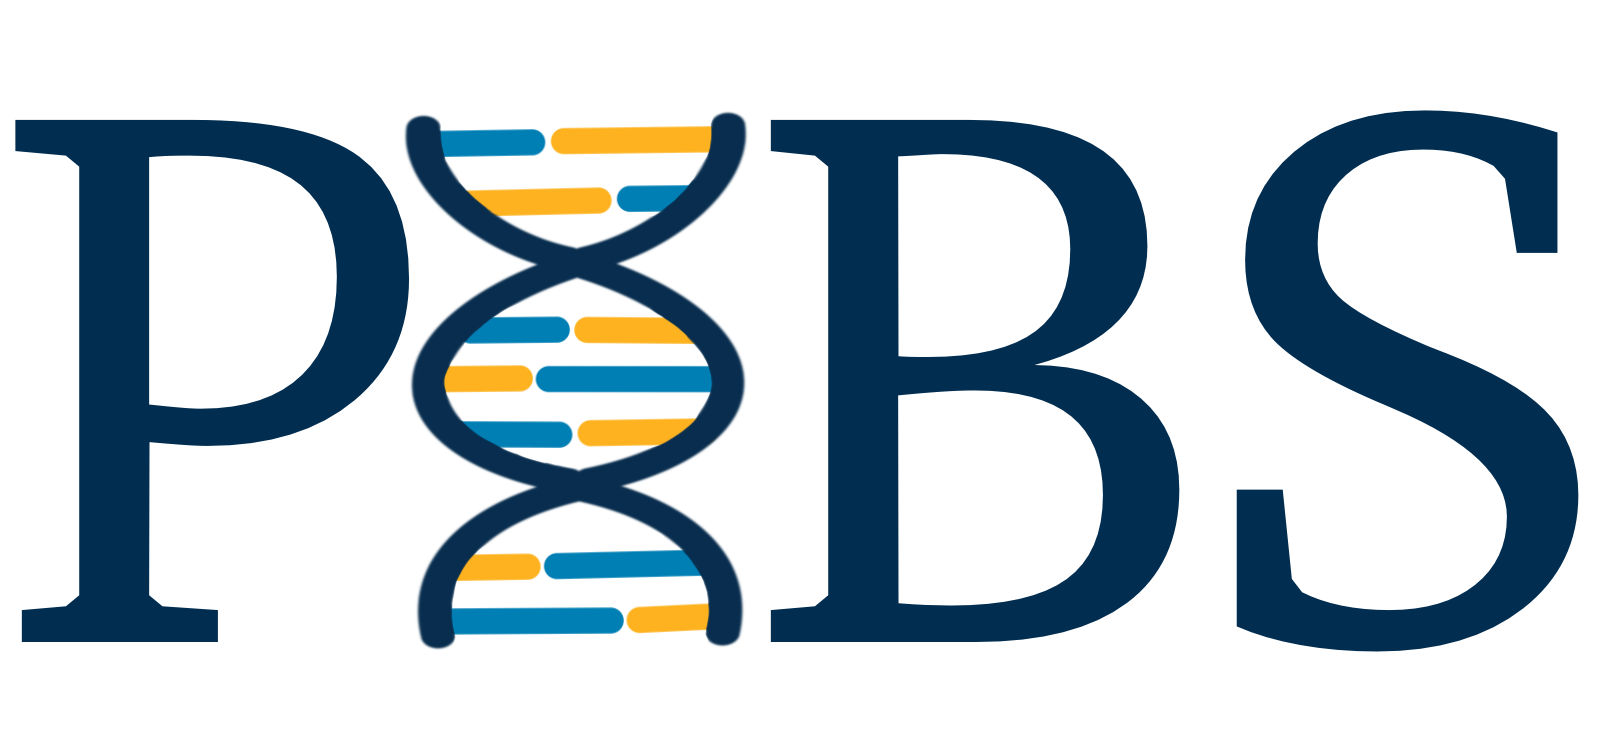 PiBS program logo